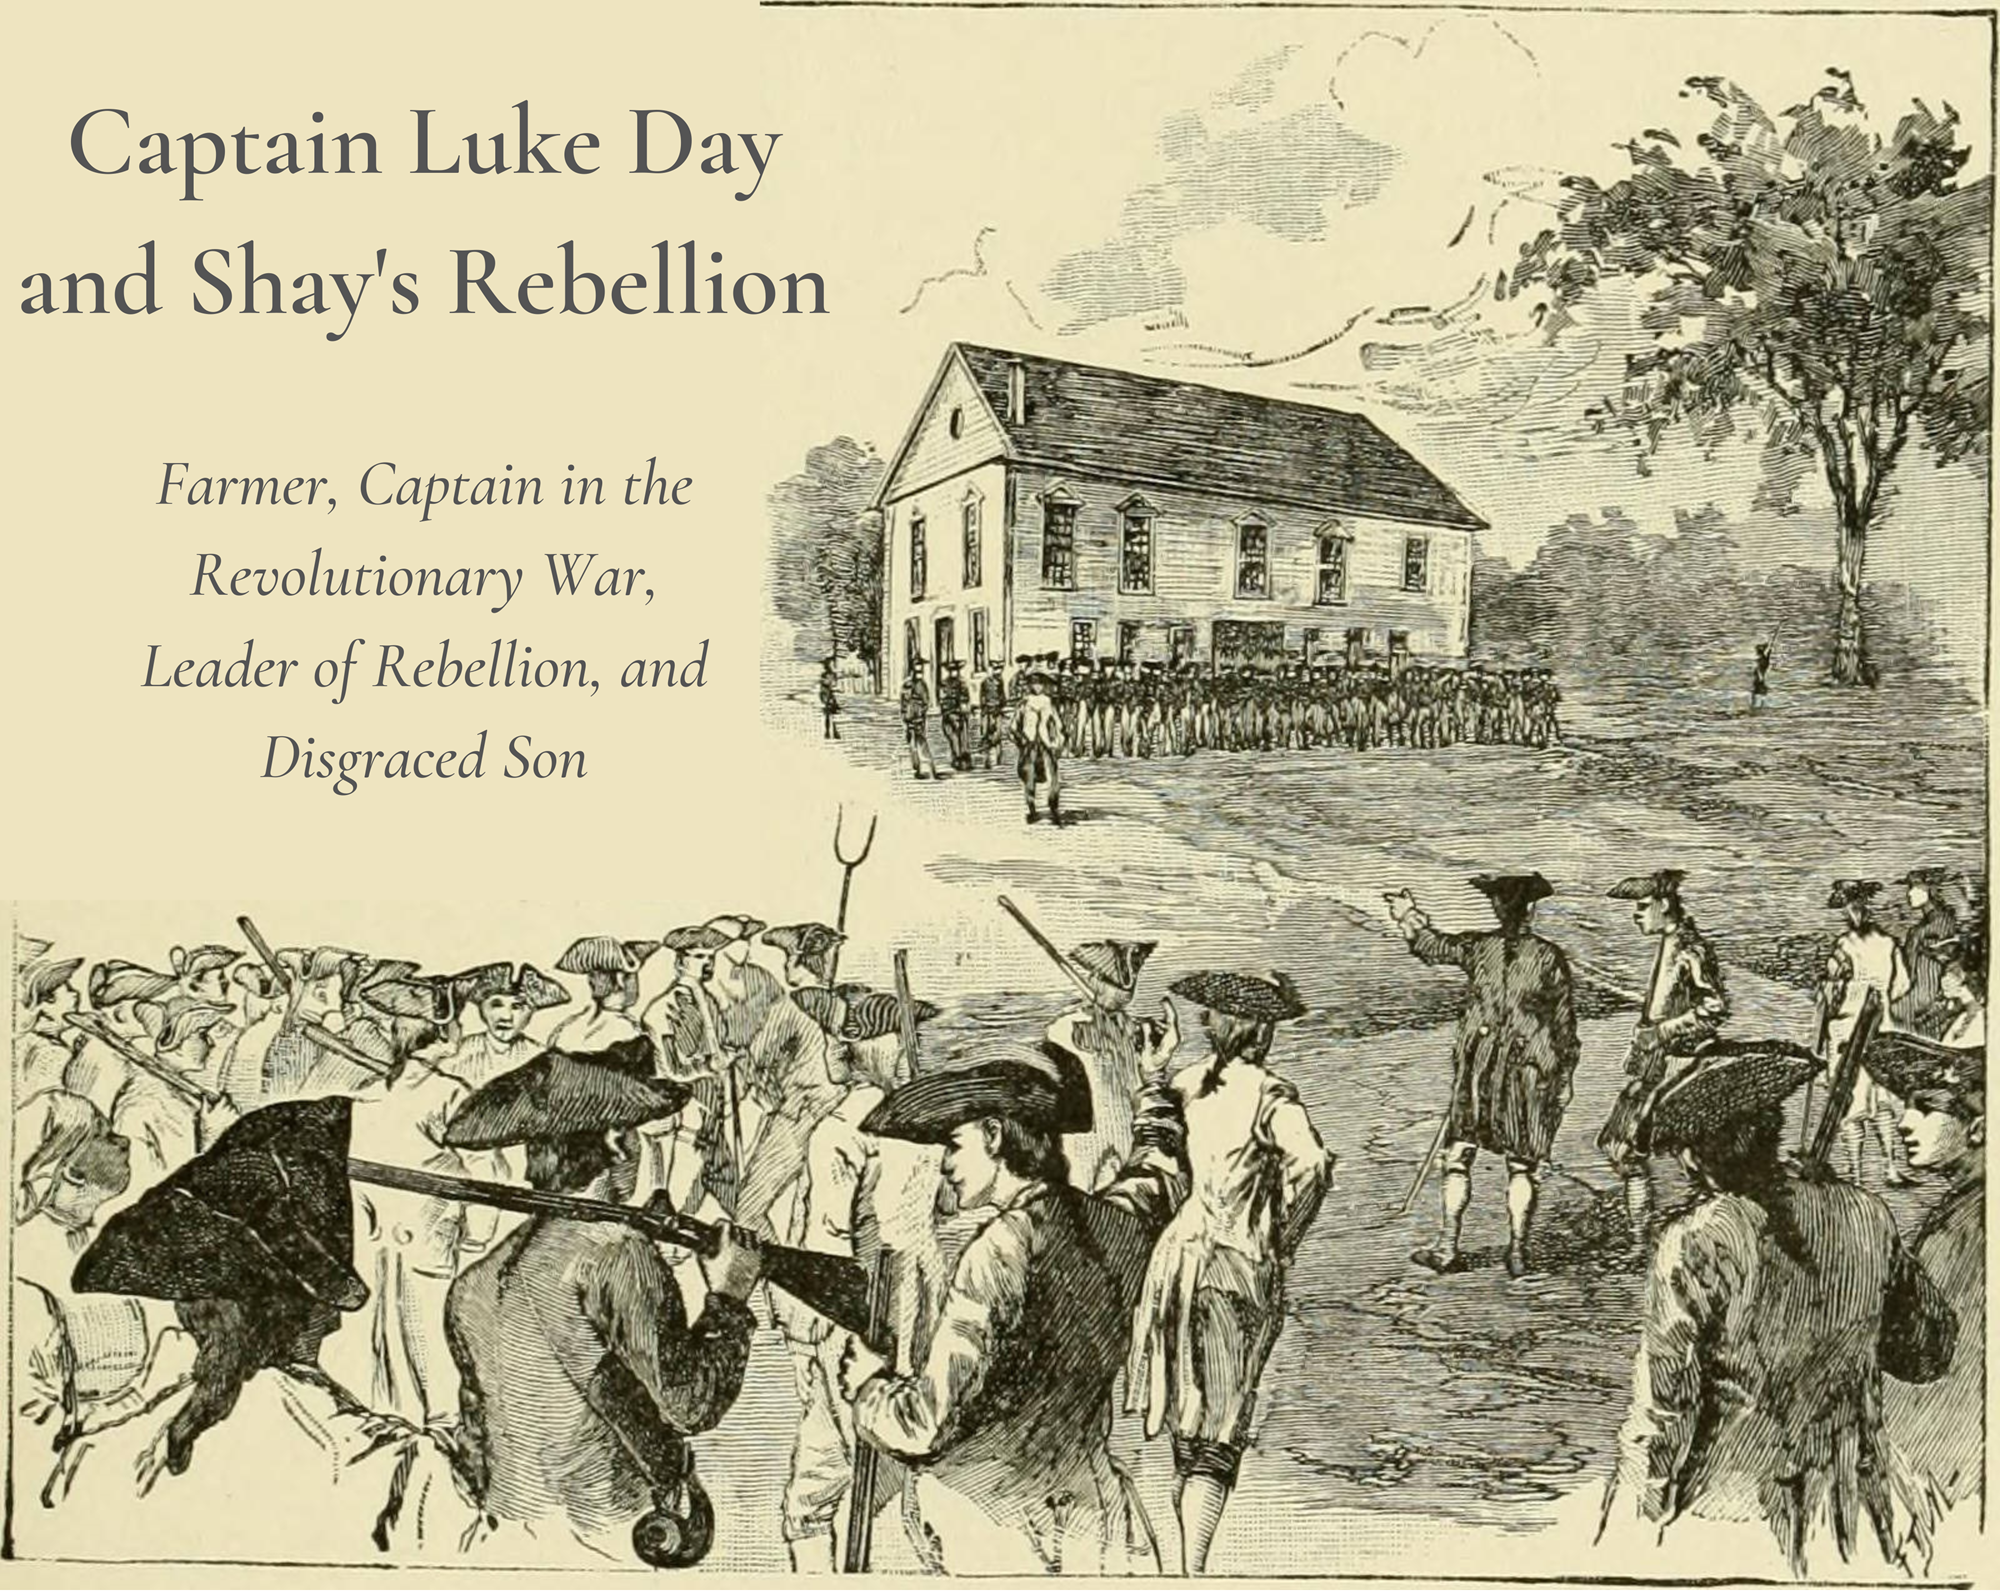 Shay's Rebellion